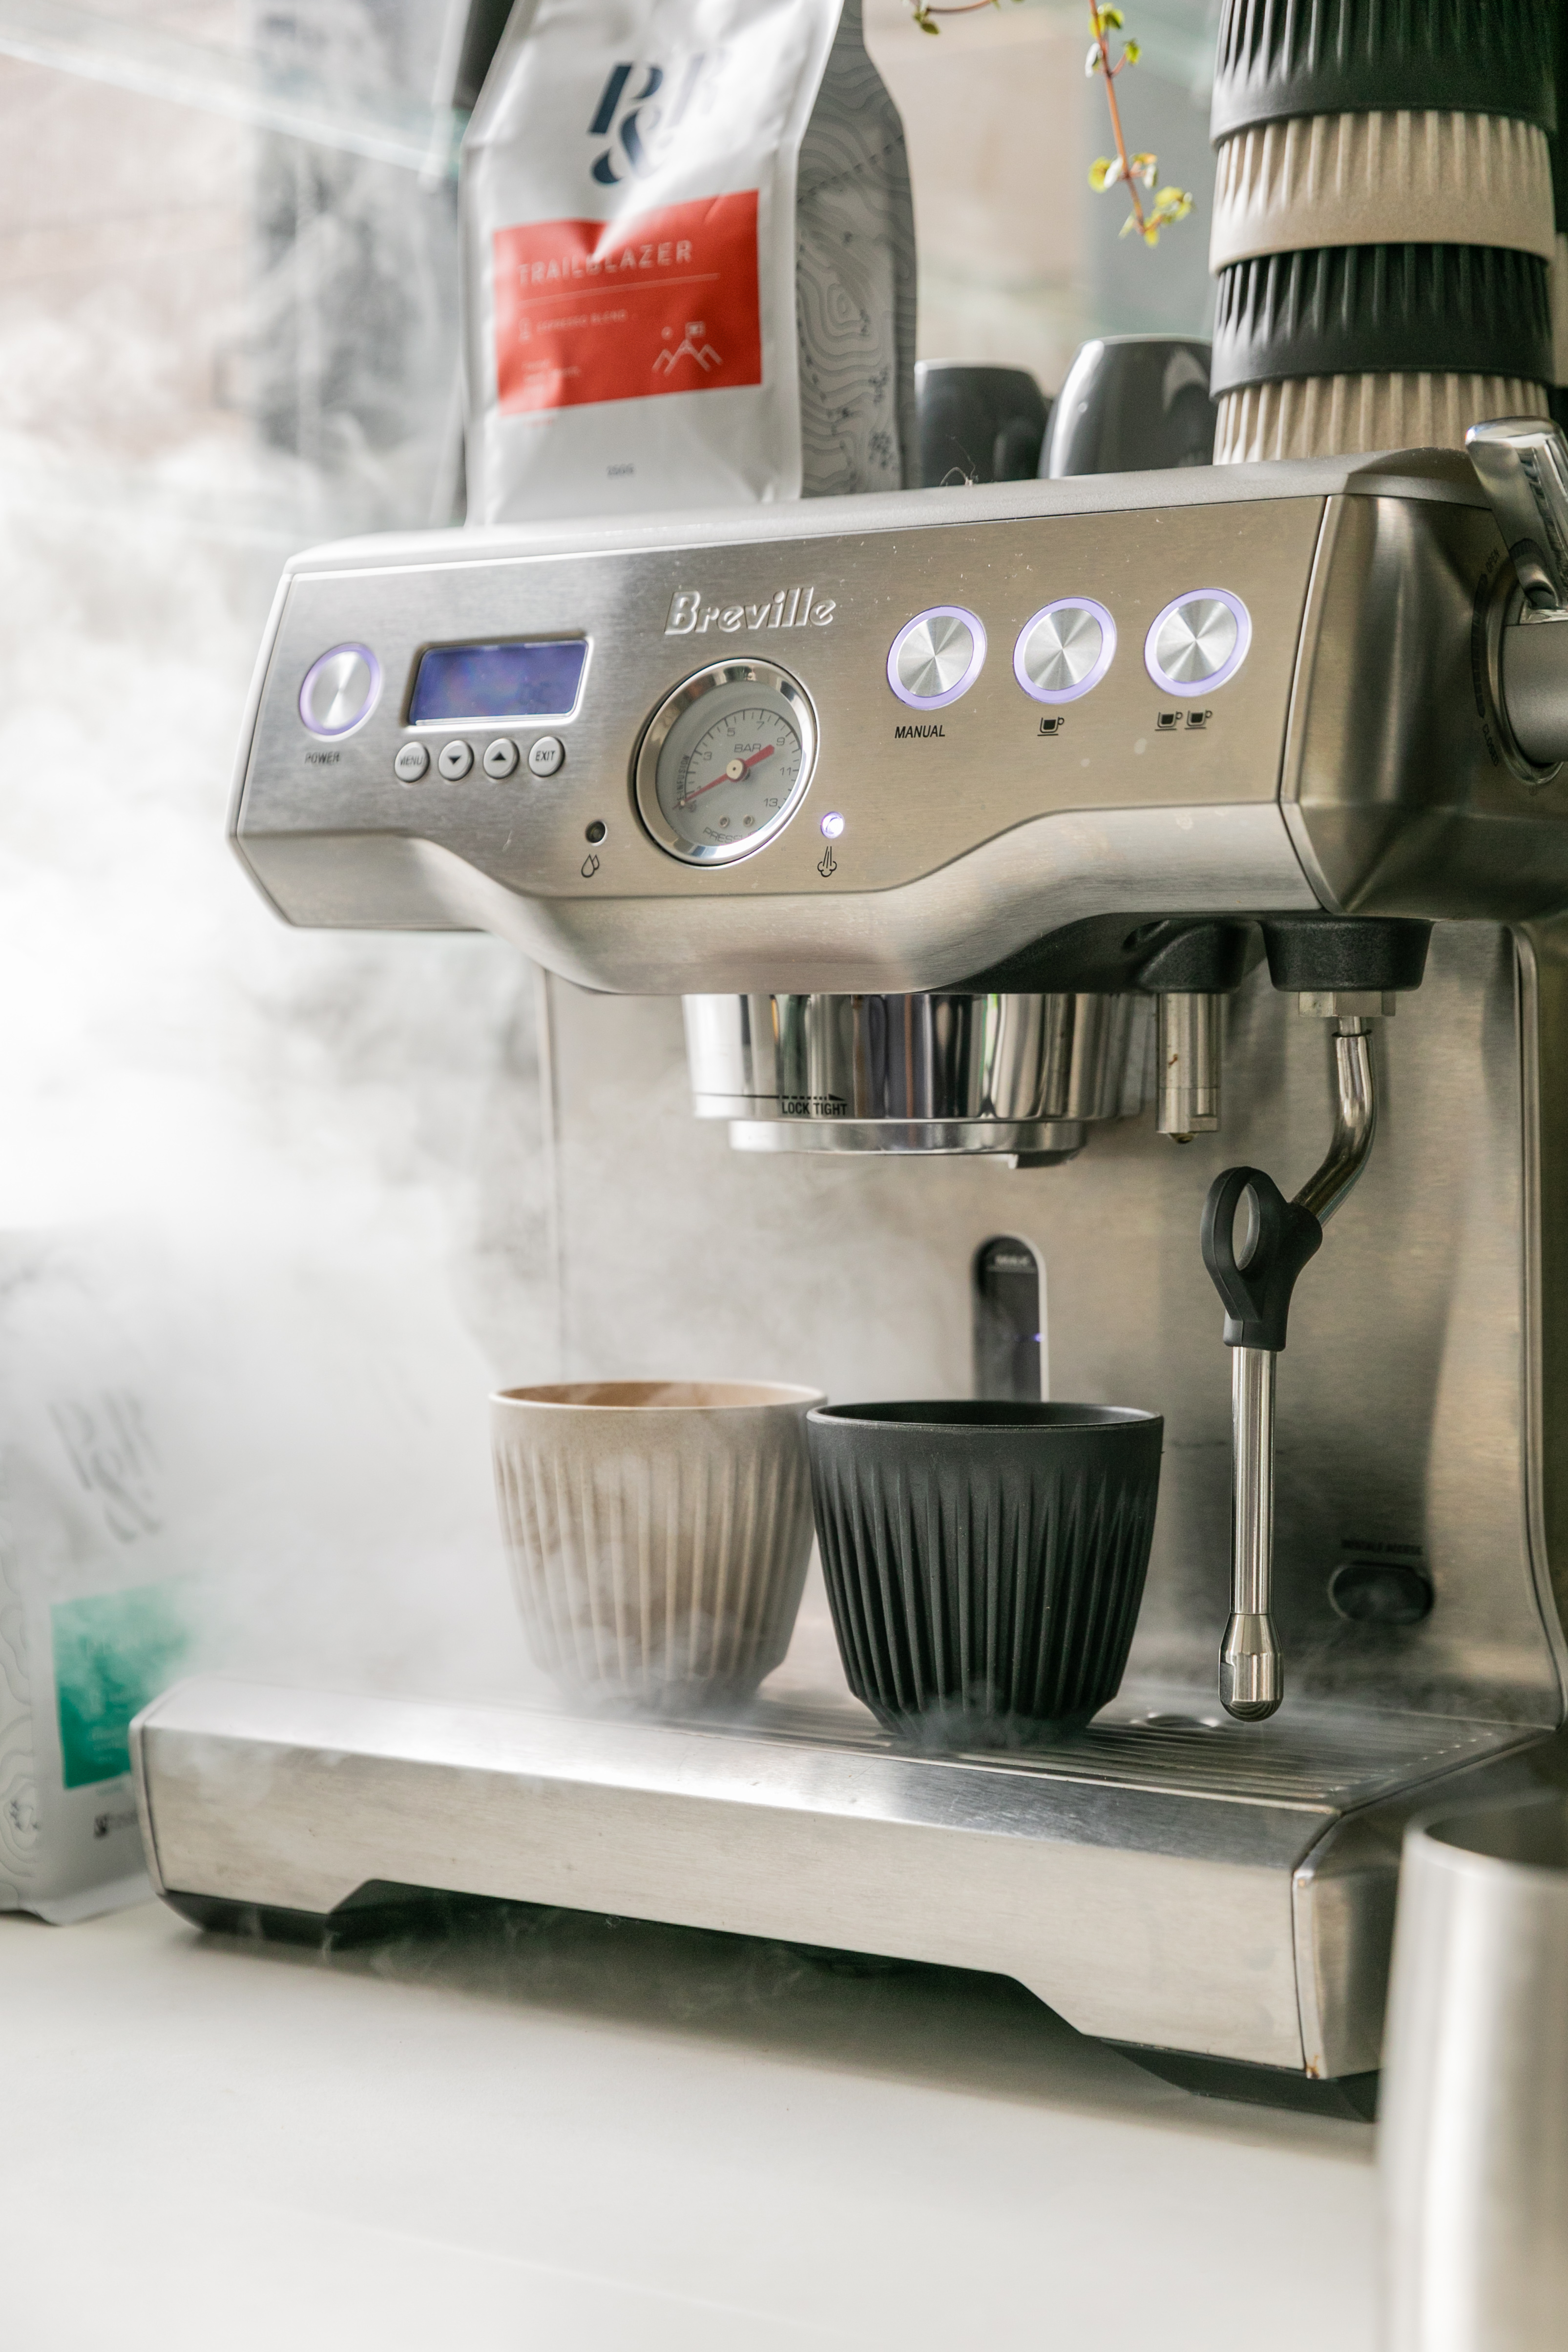 Brewing coffee using Breviile machine 